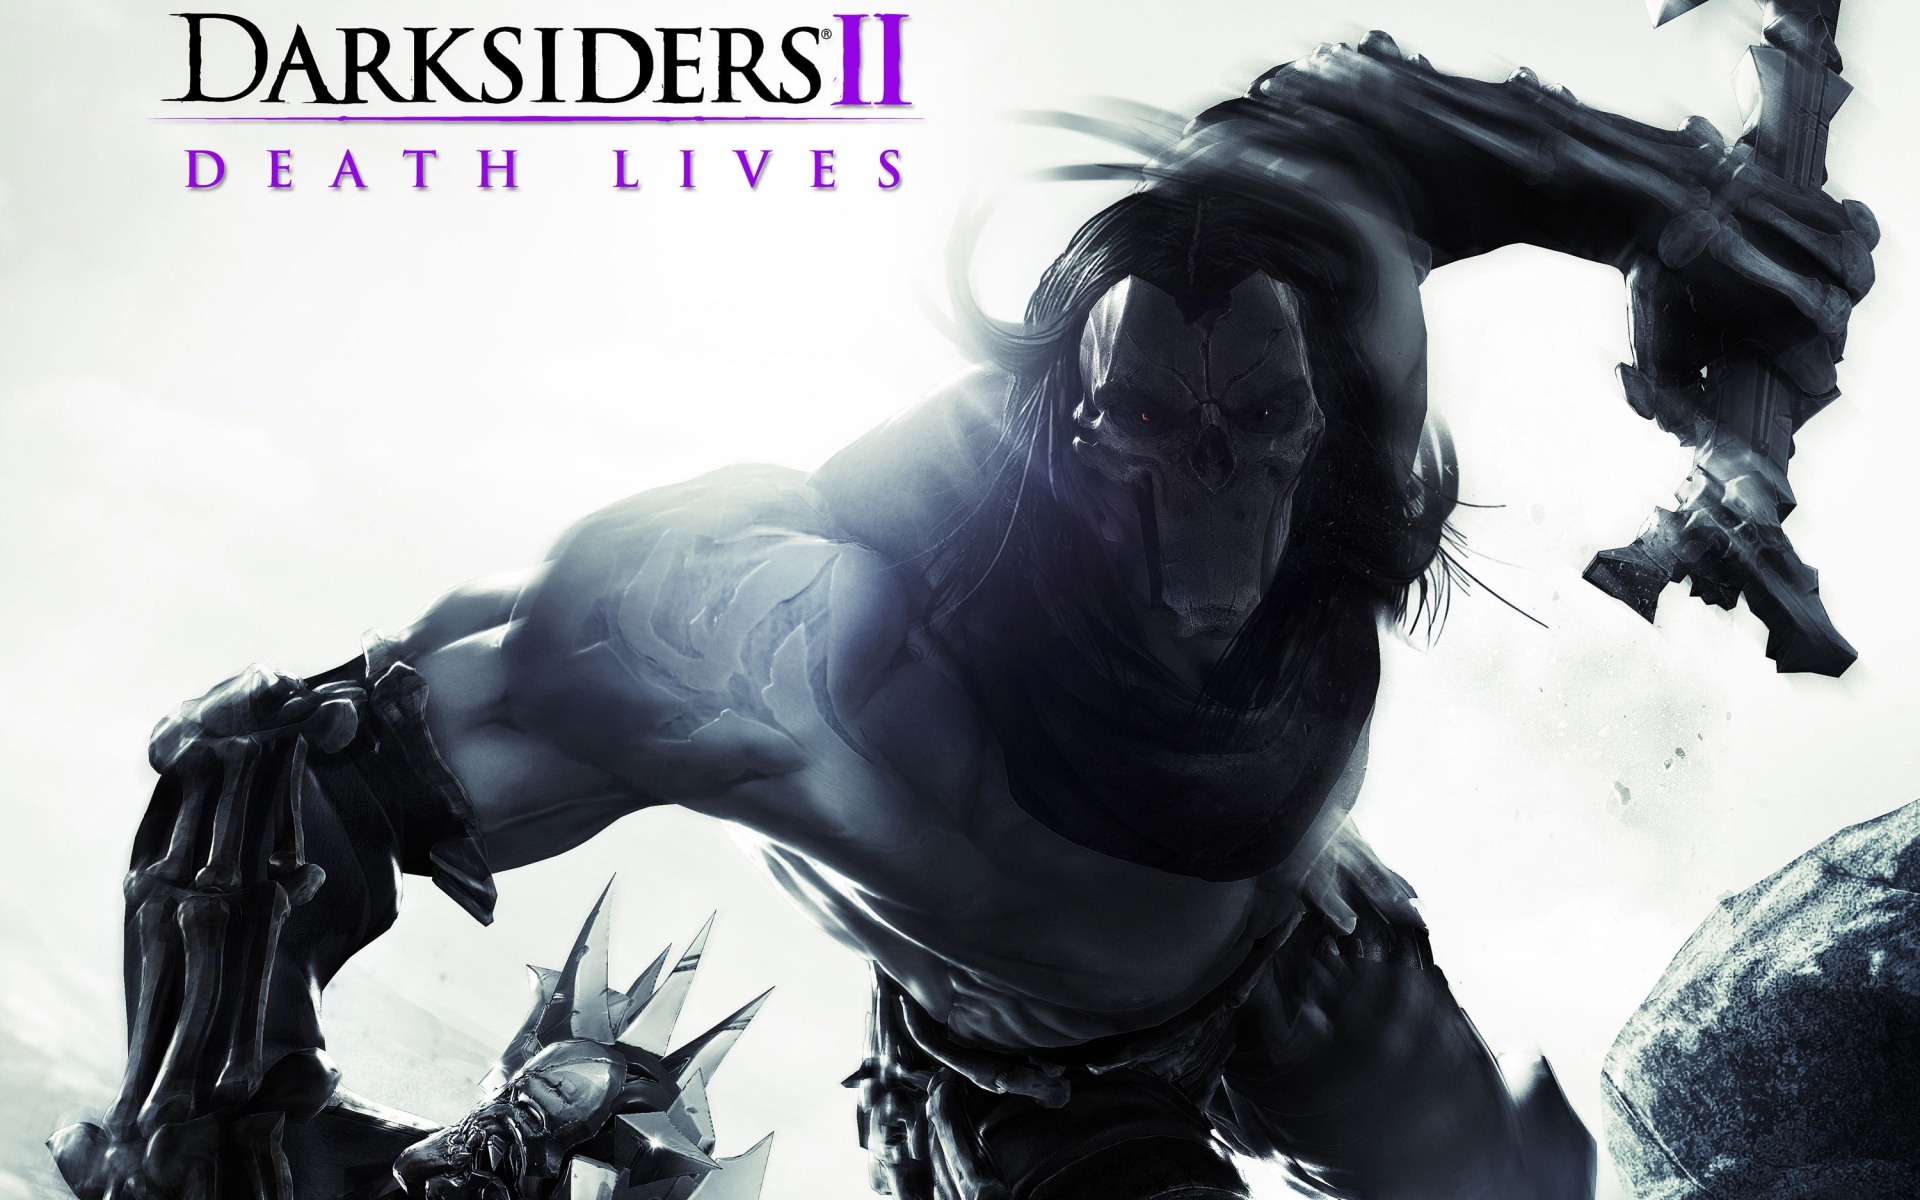 Darksiders II 暗黑血统 2 游戏高清壁纸6 - 1920x1200